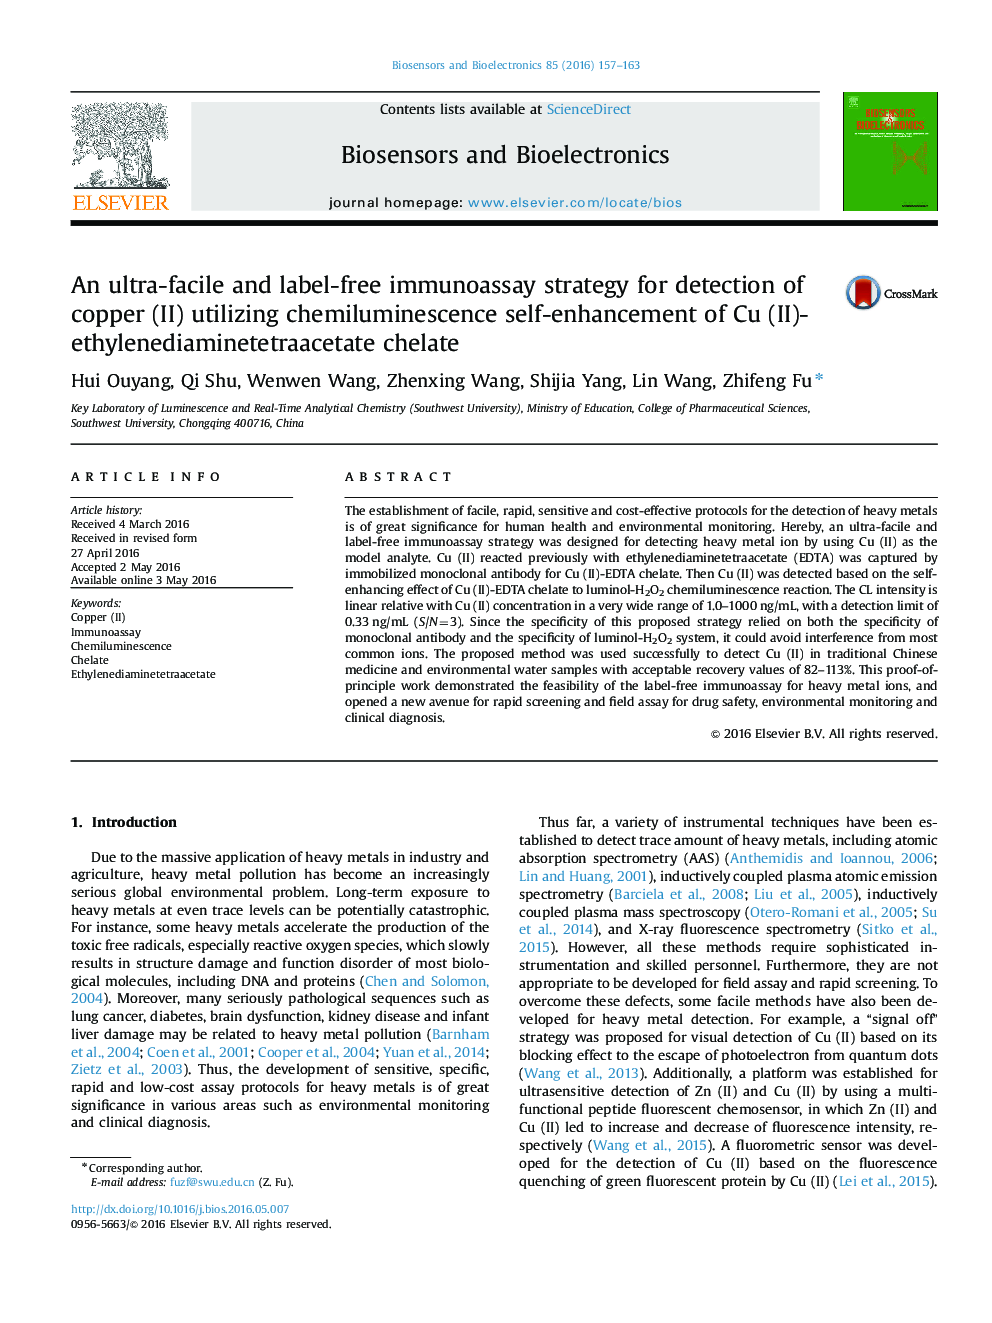 An ultra-facile and label-free immunoassay strategy for detection of copper (II) utilizing chemiluminescence self-enhancement of Cu (II)-ethylenediaminetetraacetate chelate